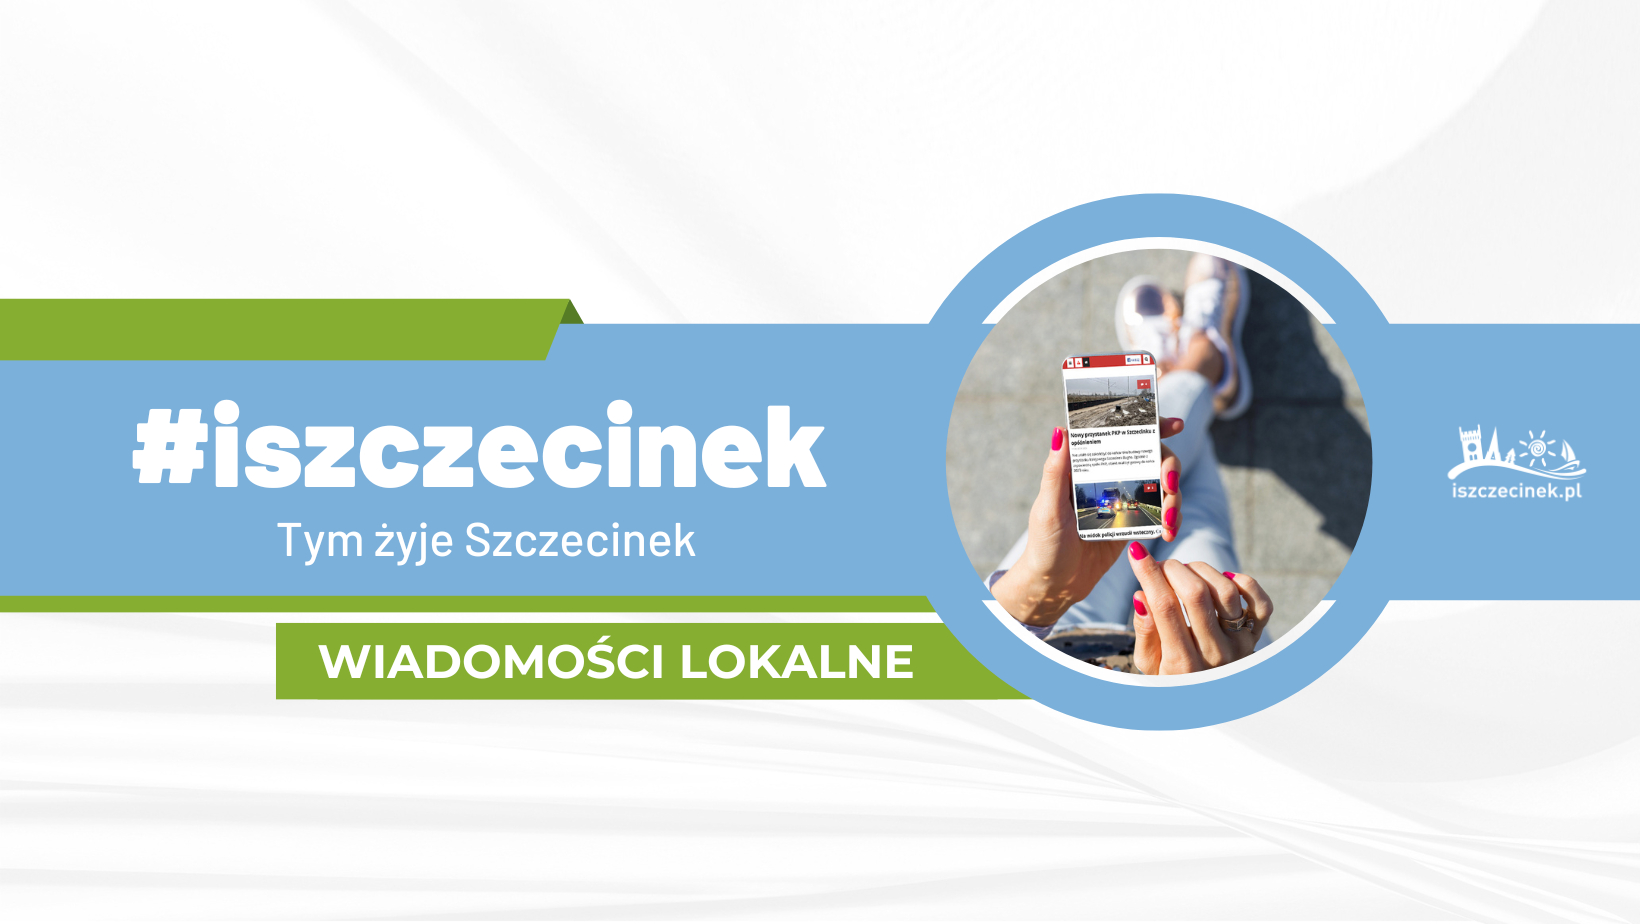 iszczecinek.pl na Facebooku